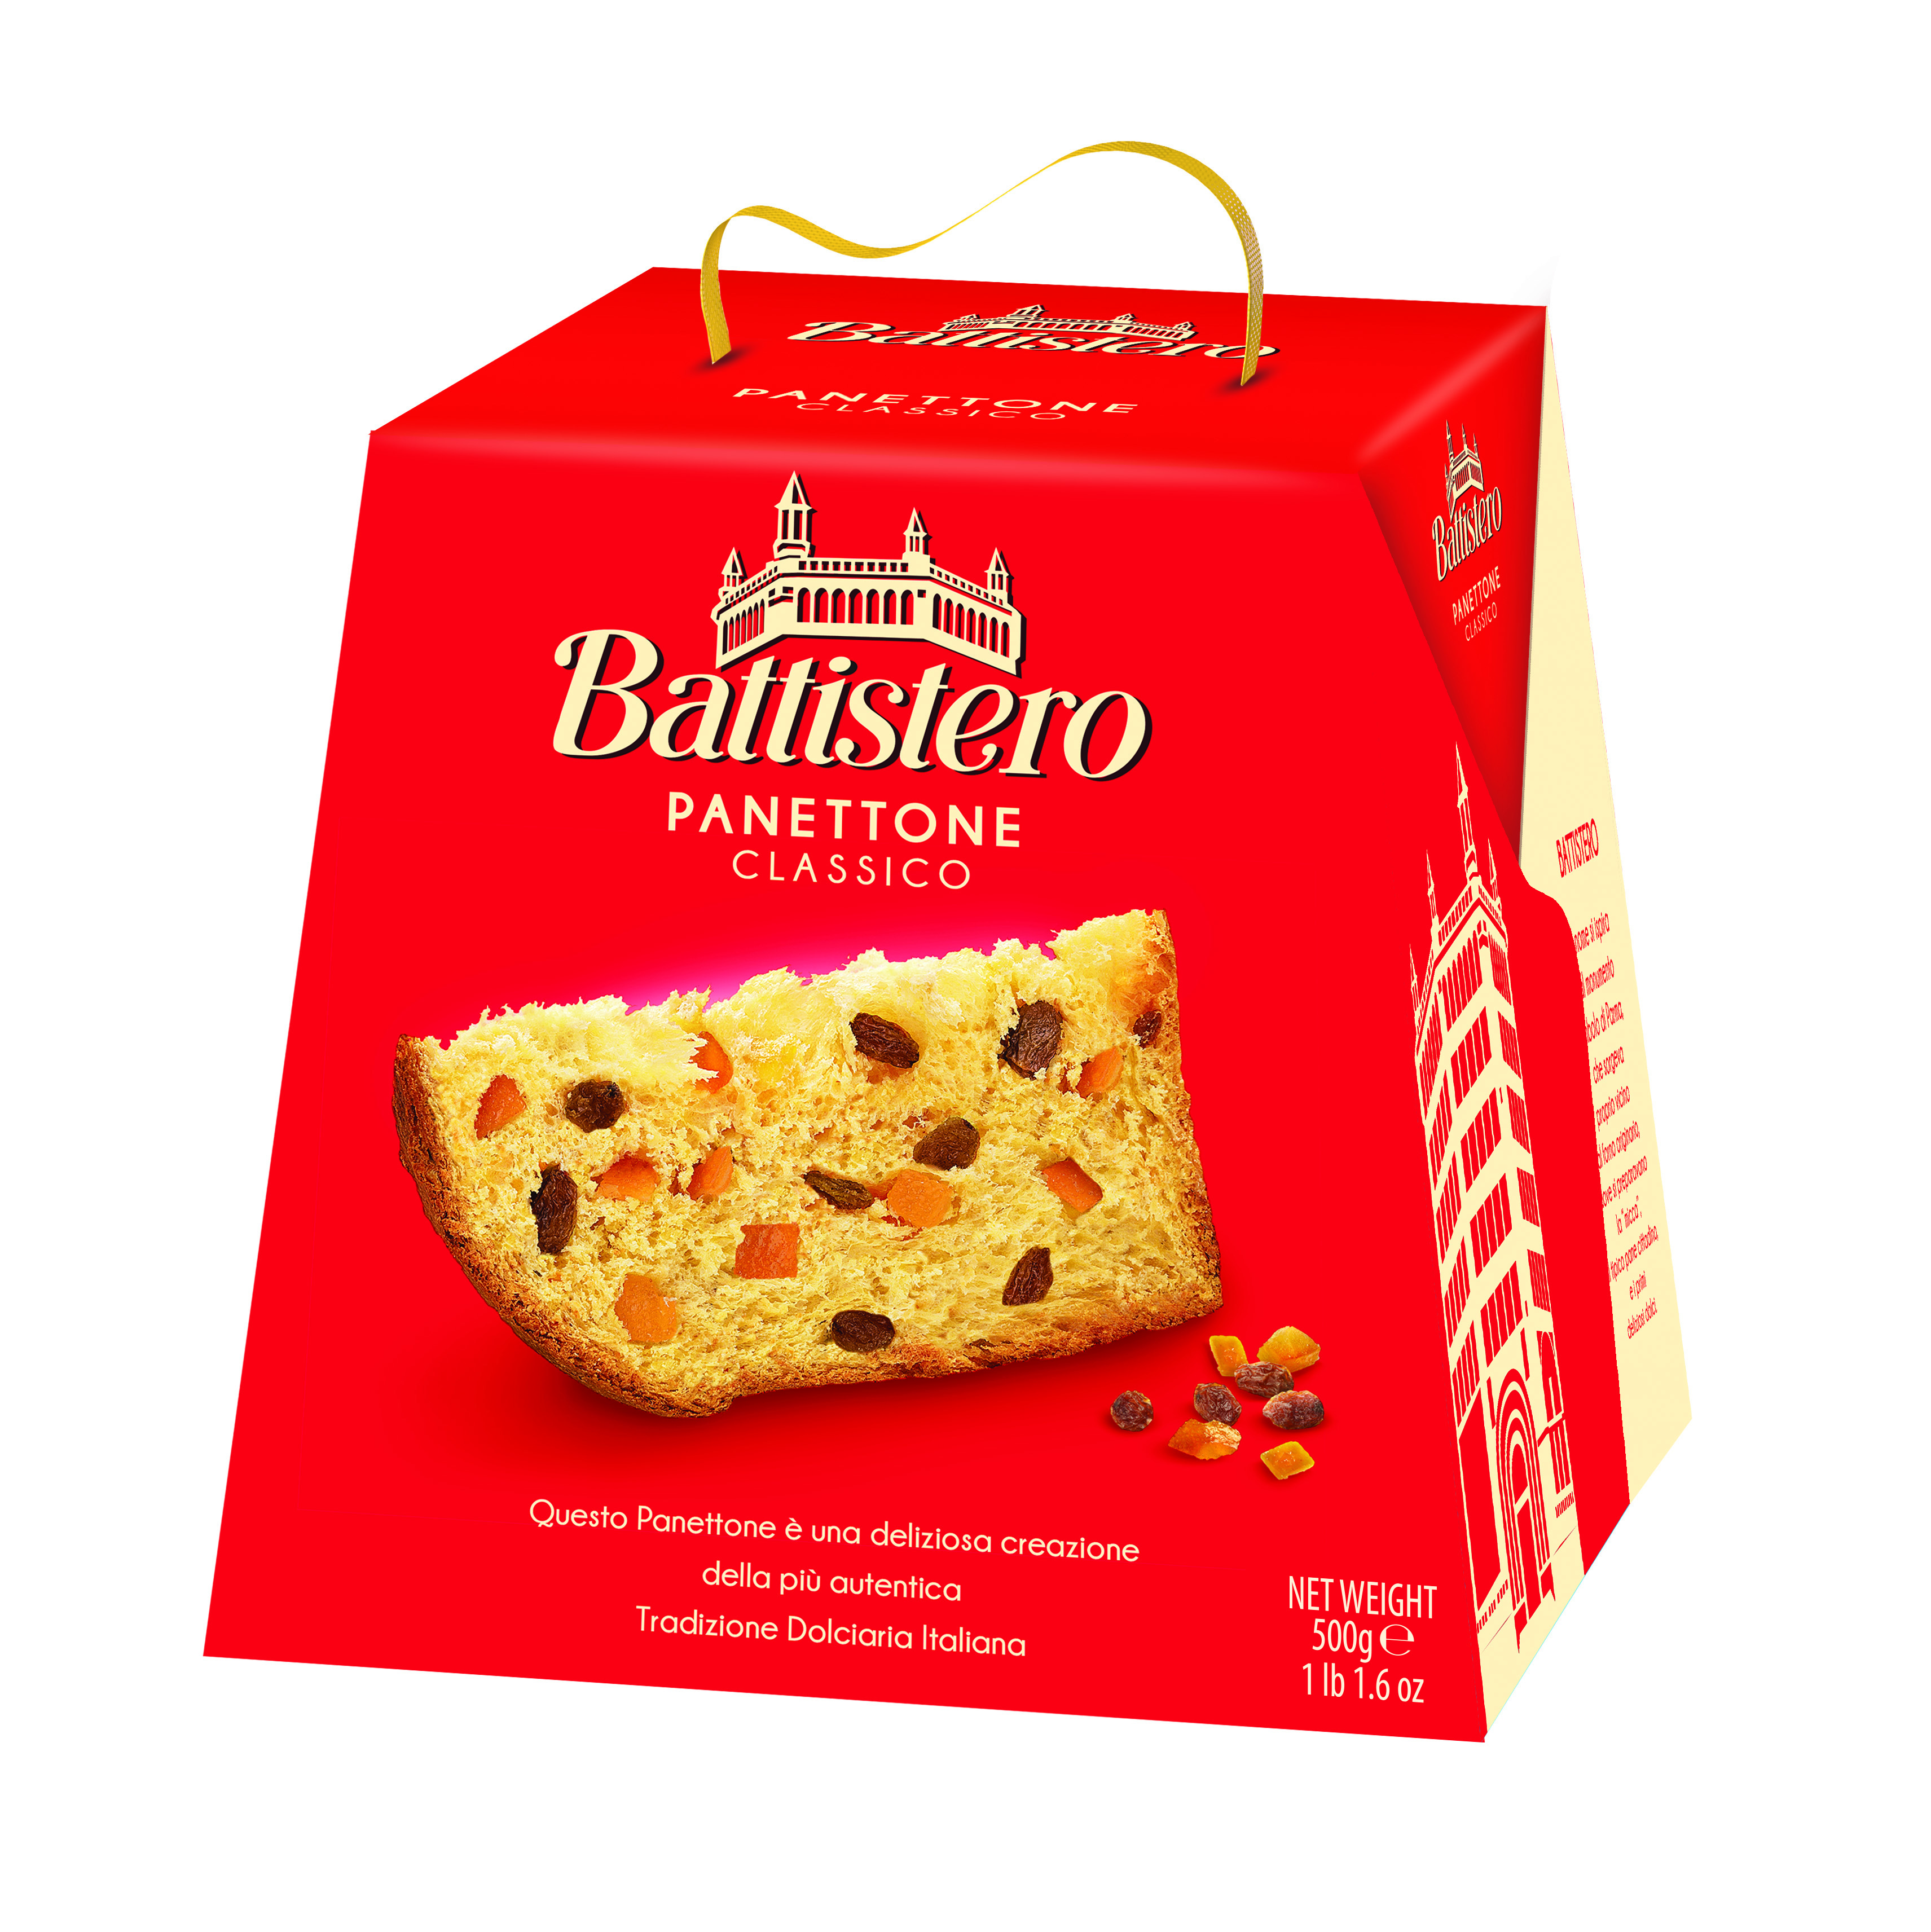 Панеттоне Battistero, изюм/цукаты, на сливочном масле. Купить интернет-магазине Olivaitalia